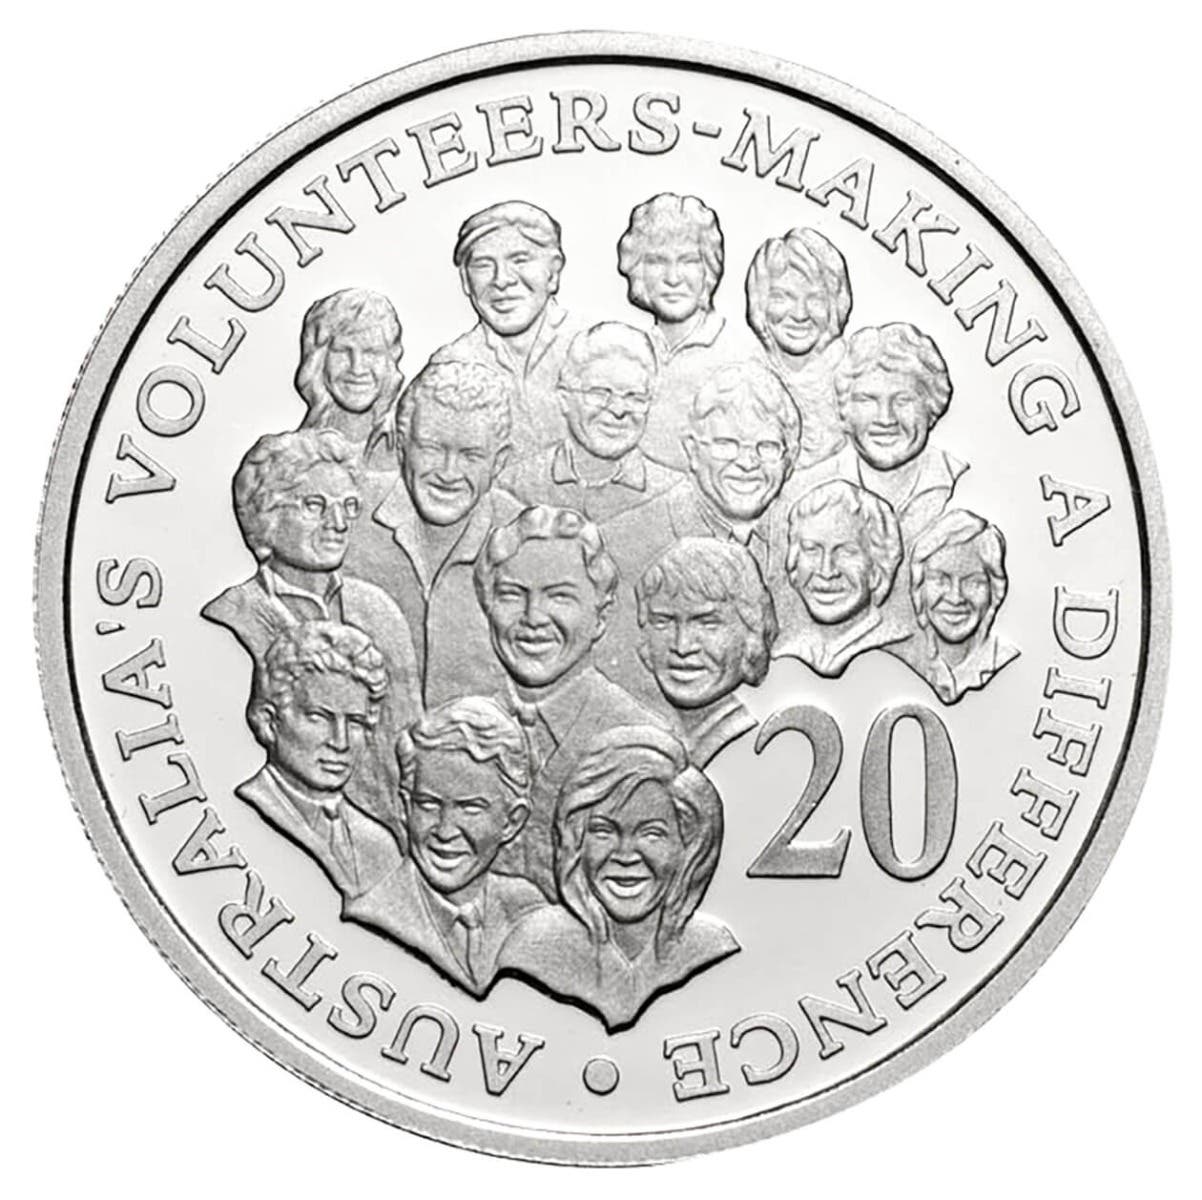 Australia's Volunteers 2003 20c Cu-Ni Coin Pack